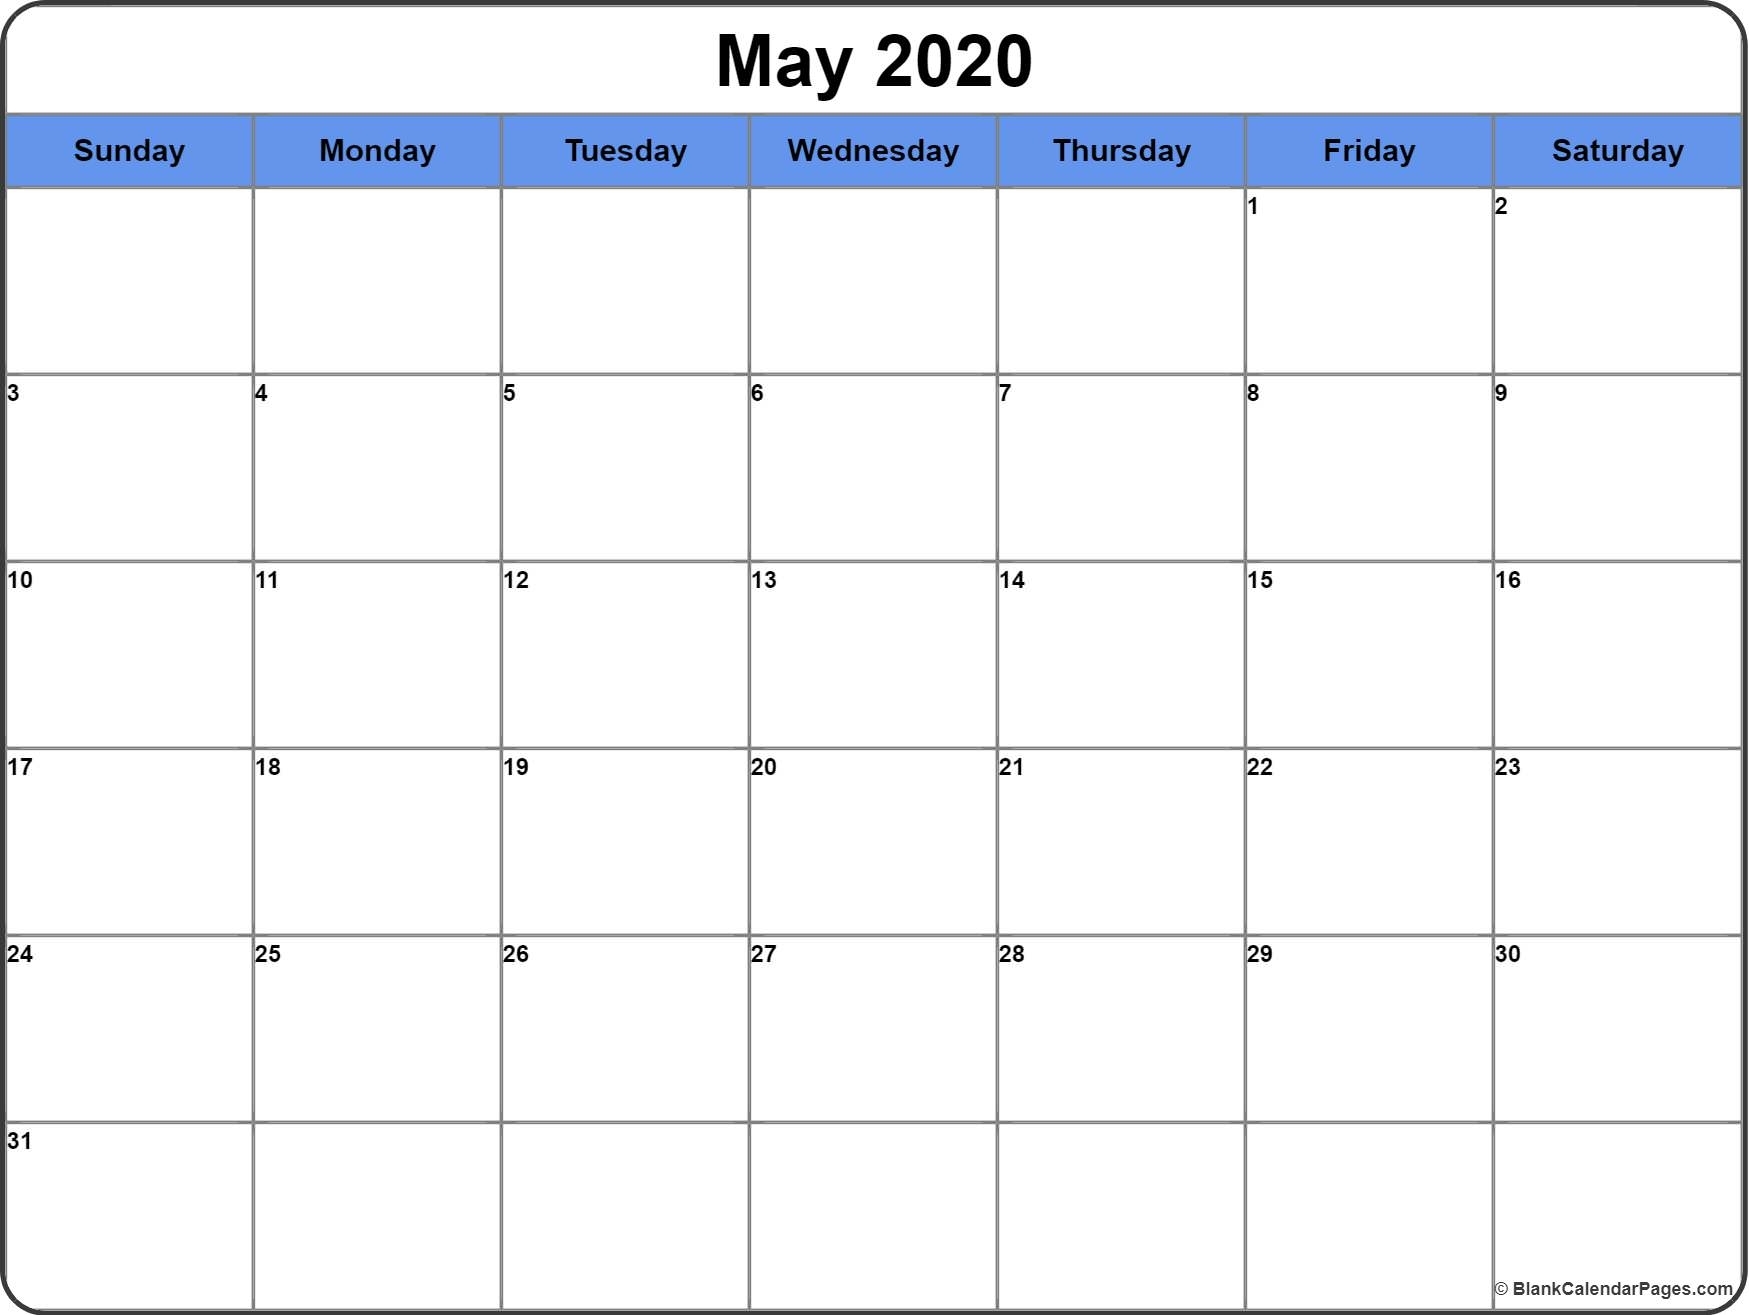 May 2020 Calendar | Free Printable Monthly Calendars throughout Free Printable Calendar For 2020 With No Download